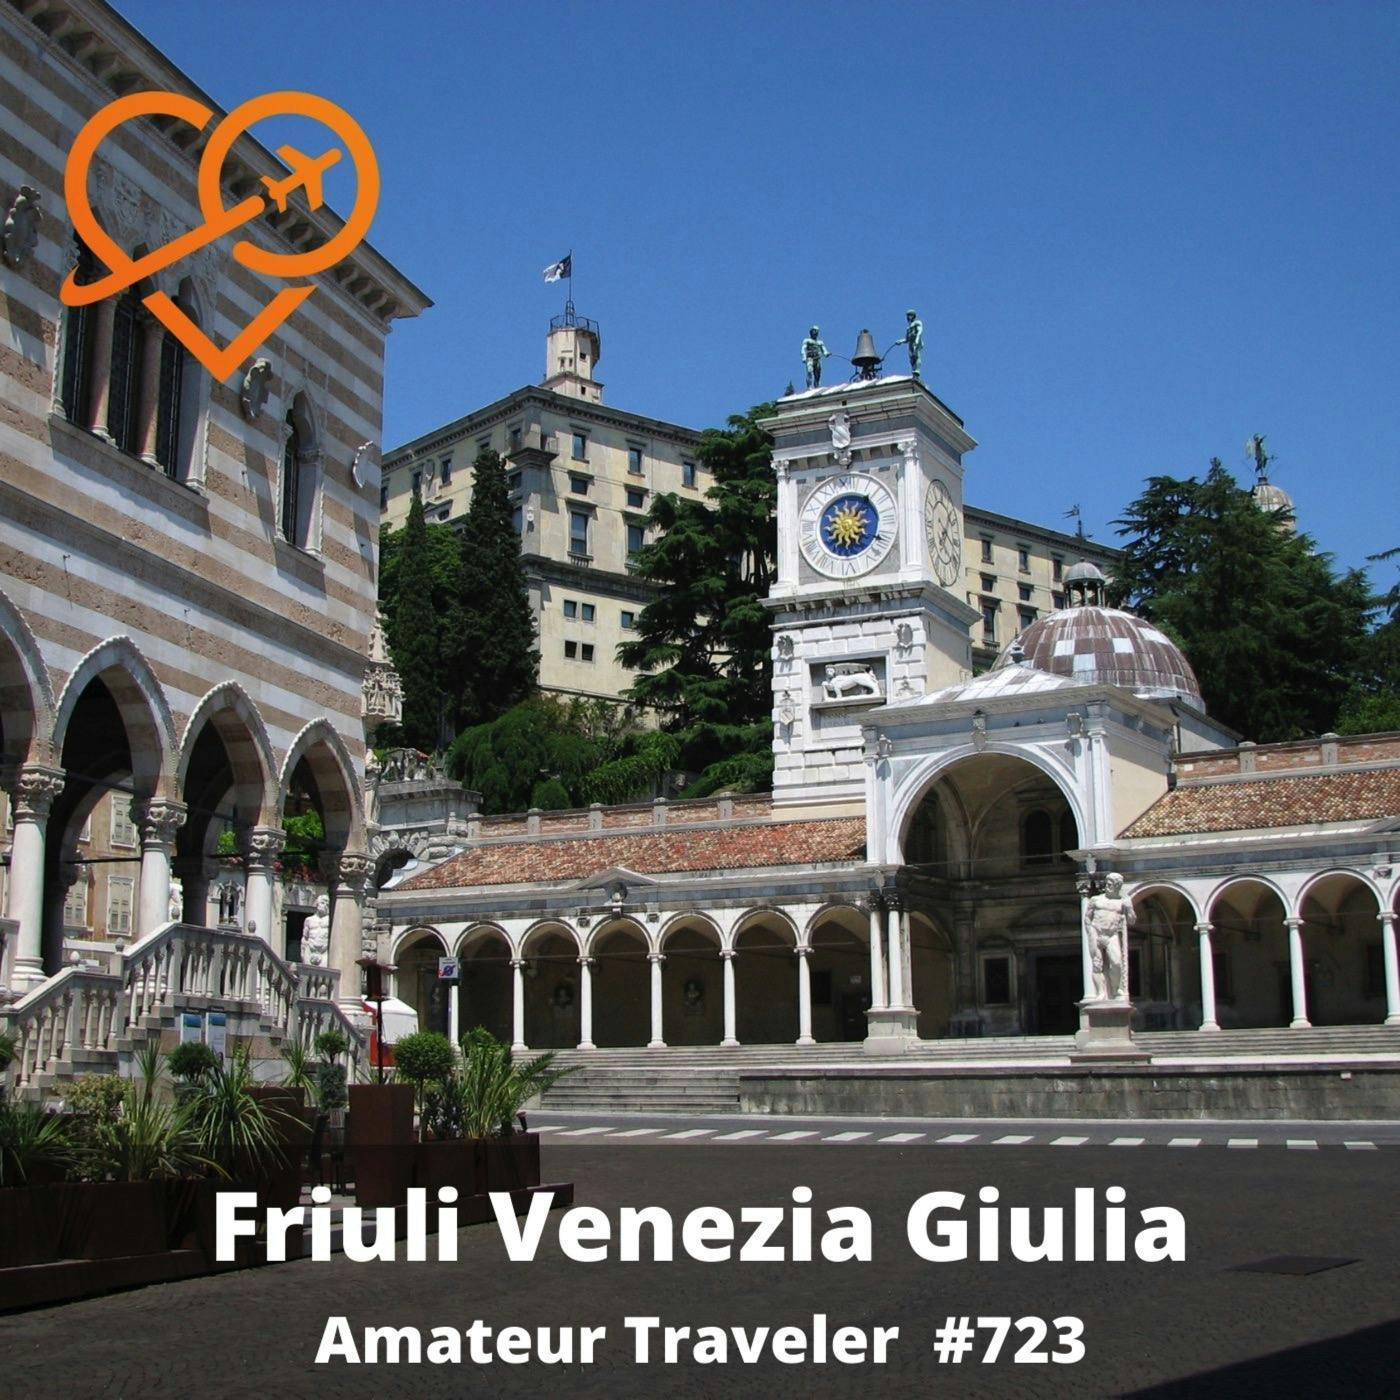 AT#723 - Travel to Friuli Venezia Giulia, Italy